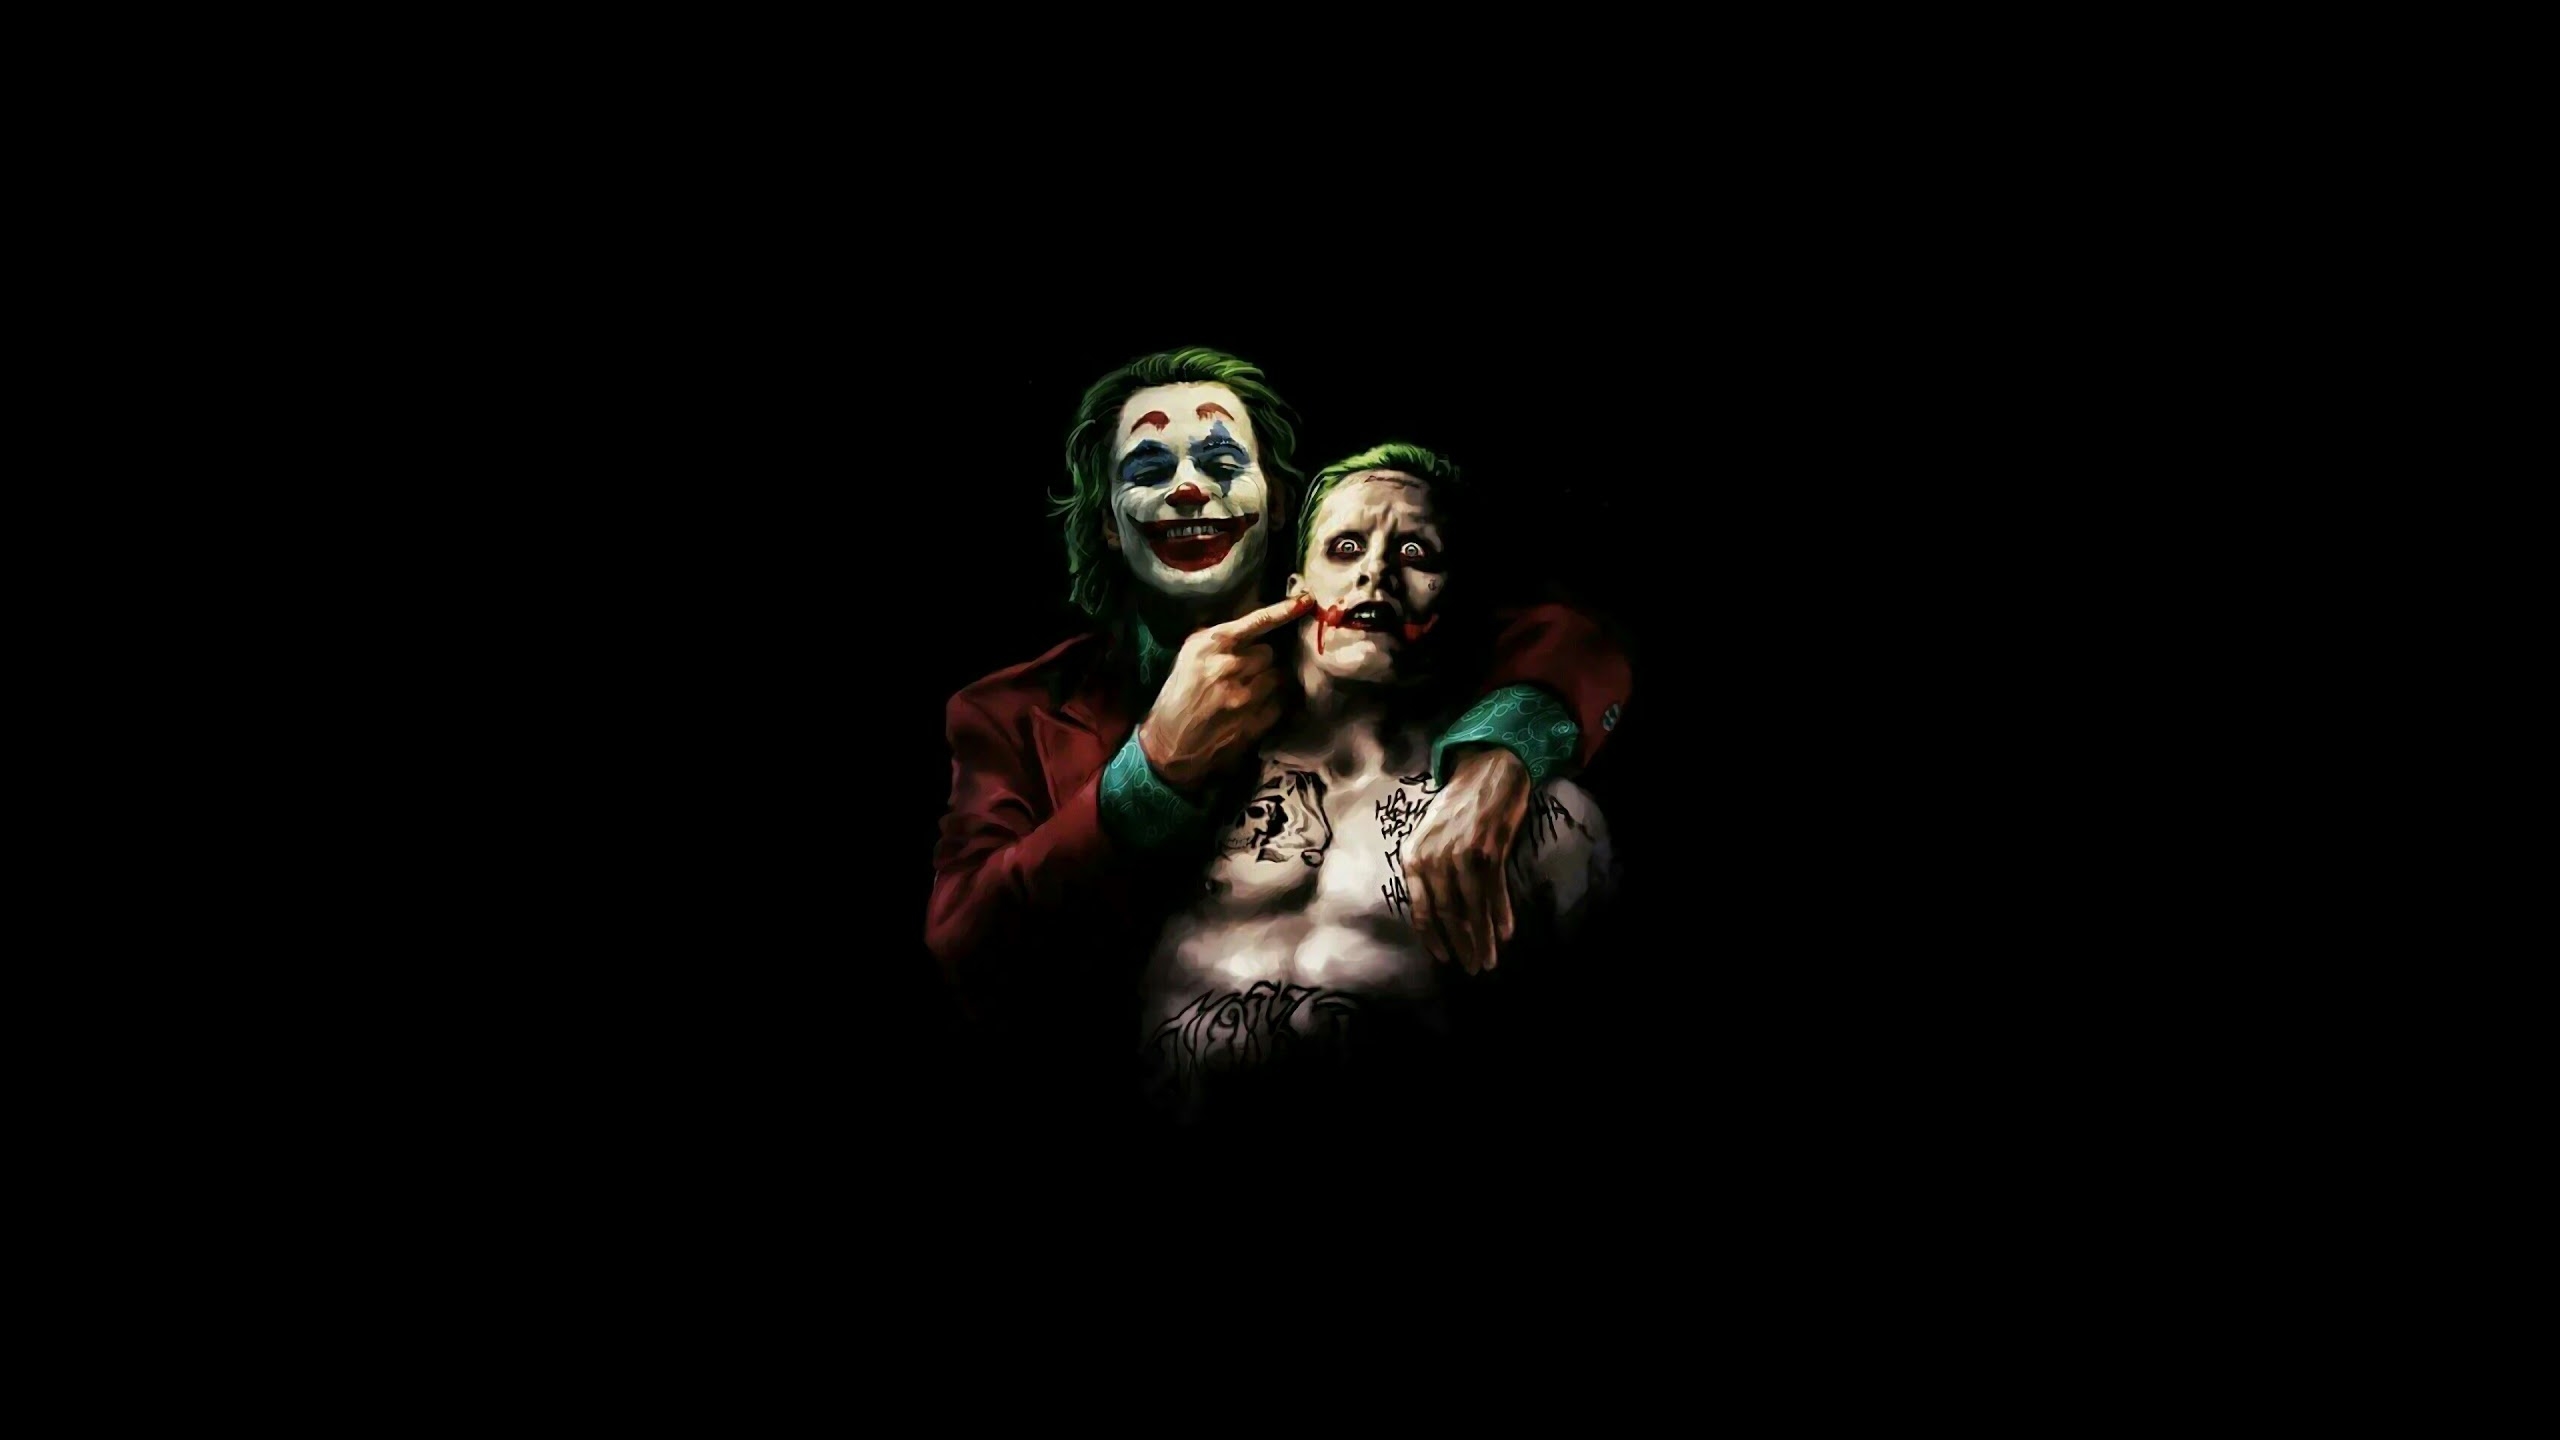 Joker HD Wallpapers | 4K Backgrounds - Wallpapers Den